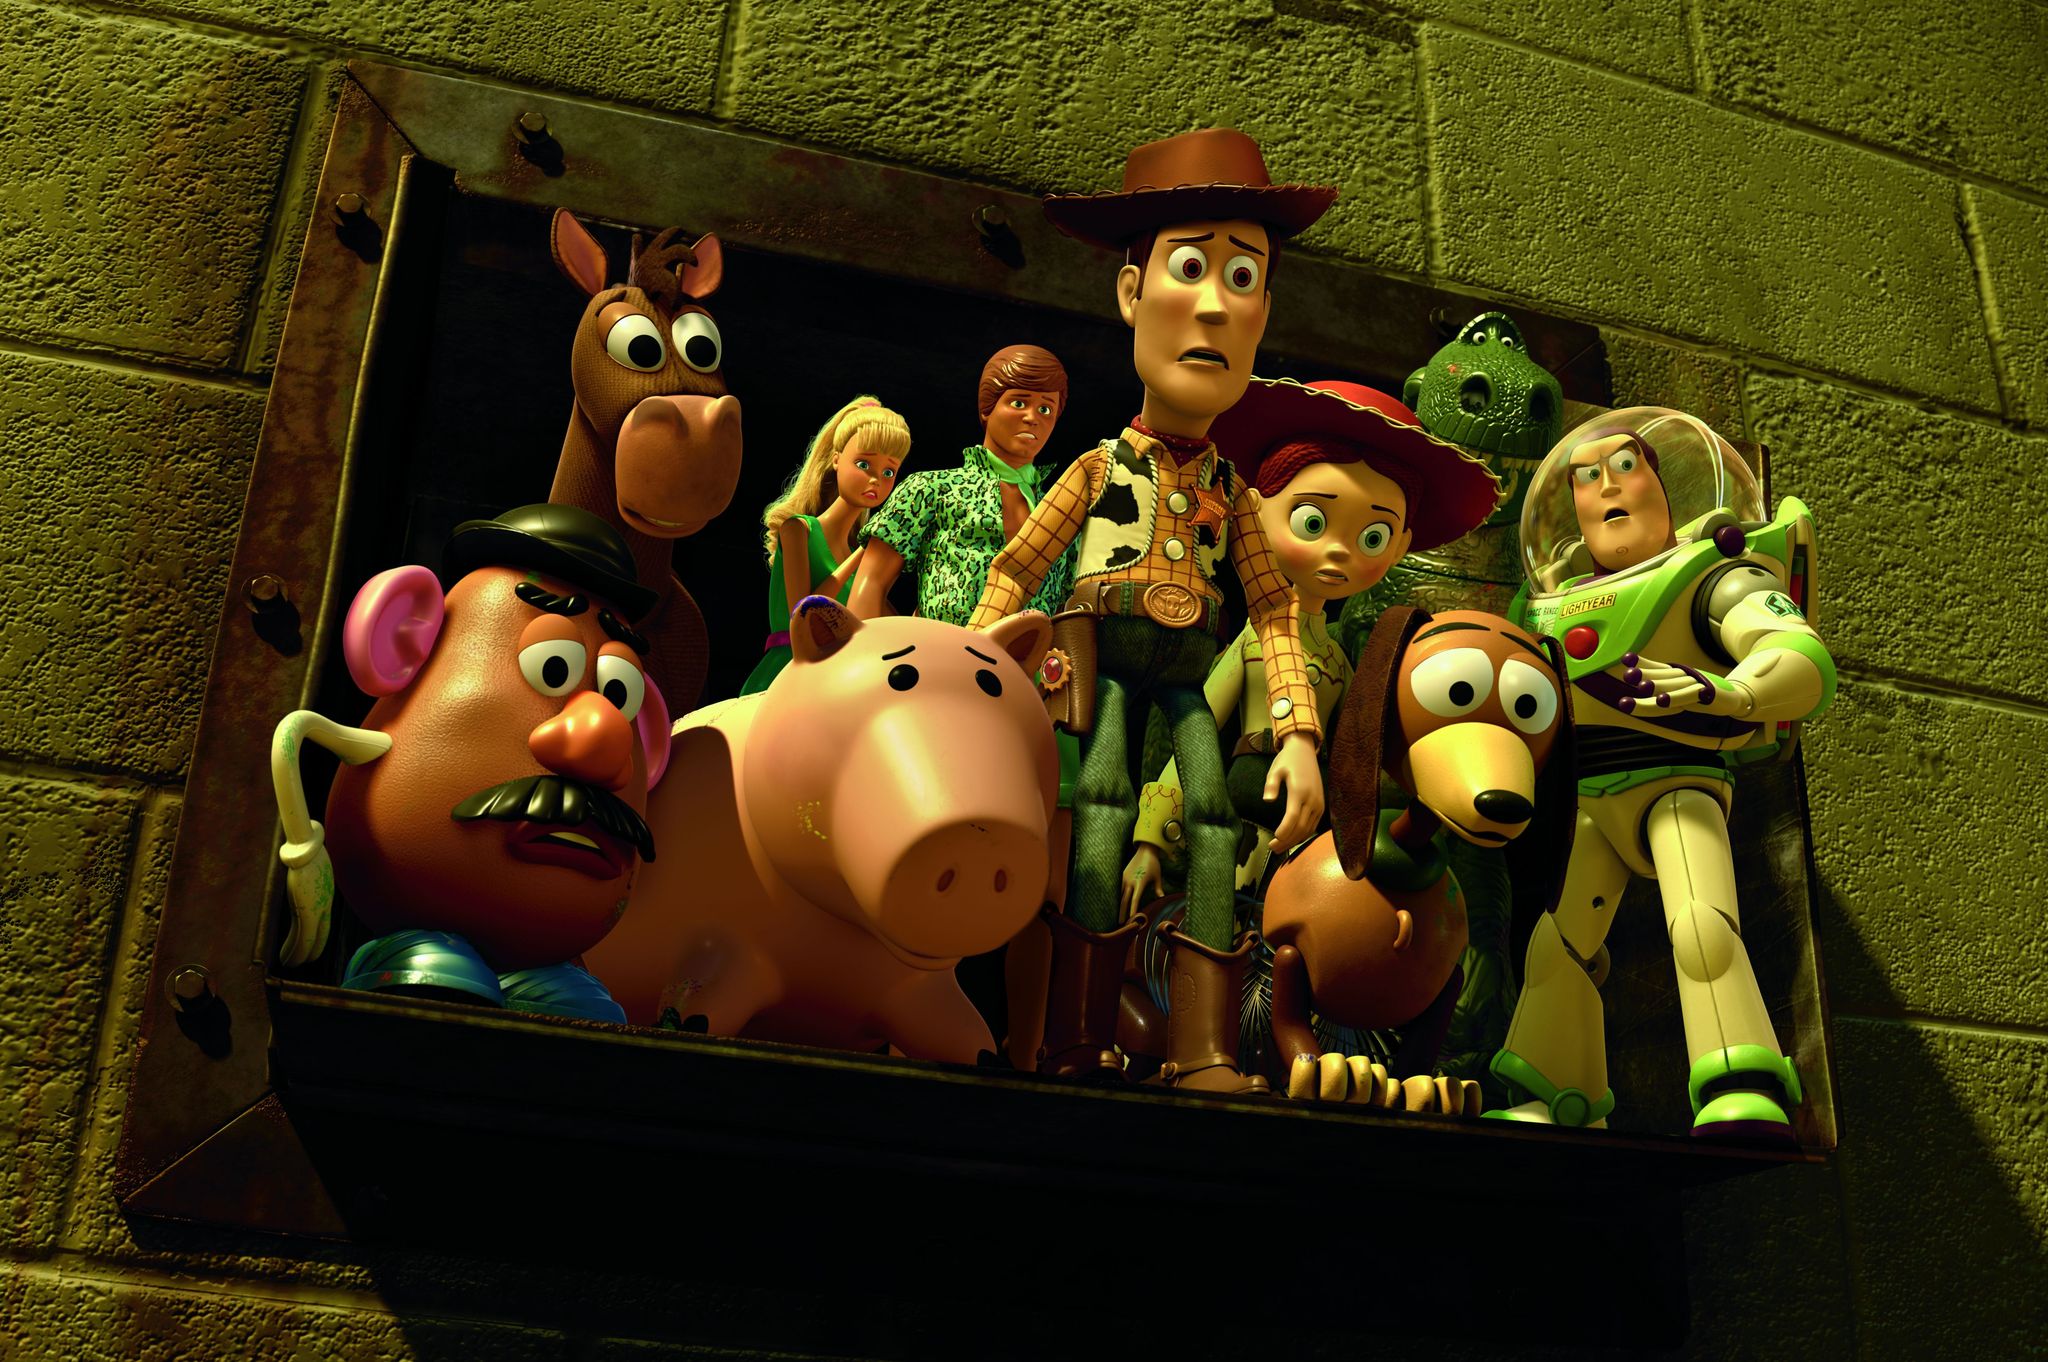 6 Pixar Movies That Make Our Readers SOB 😭